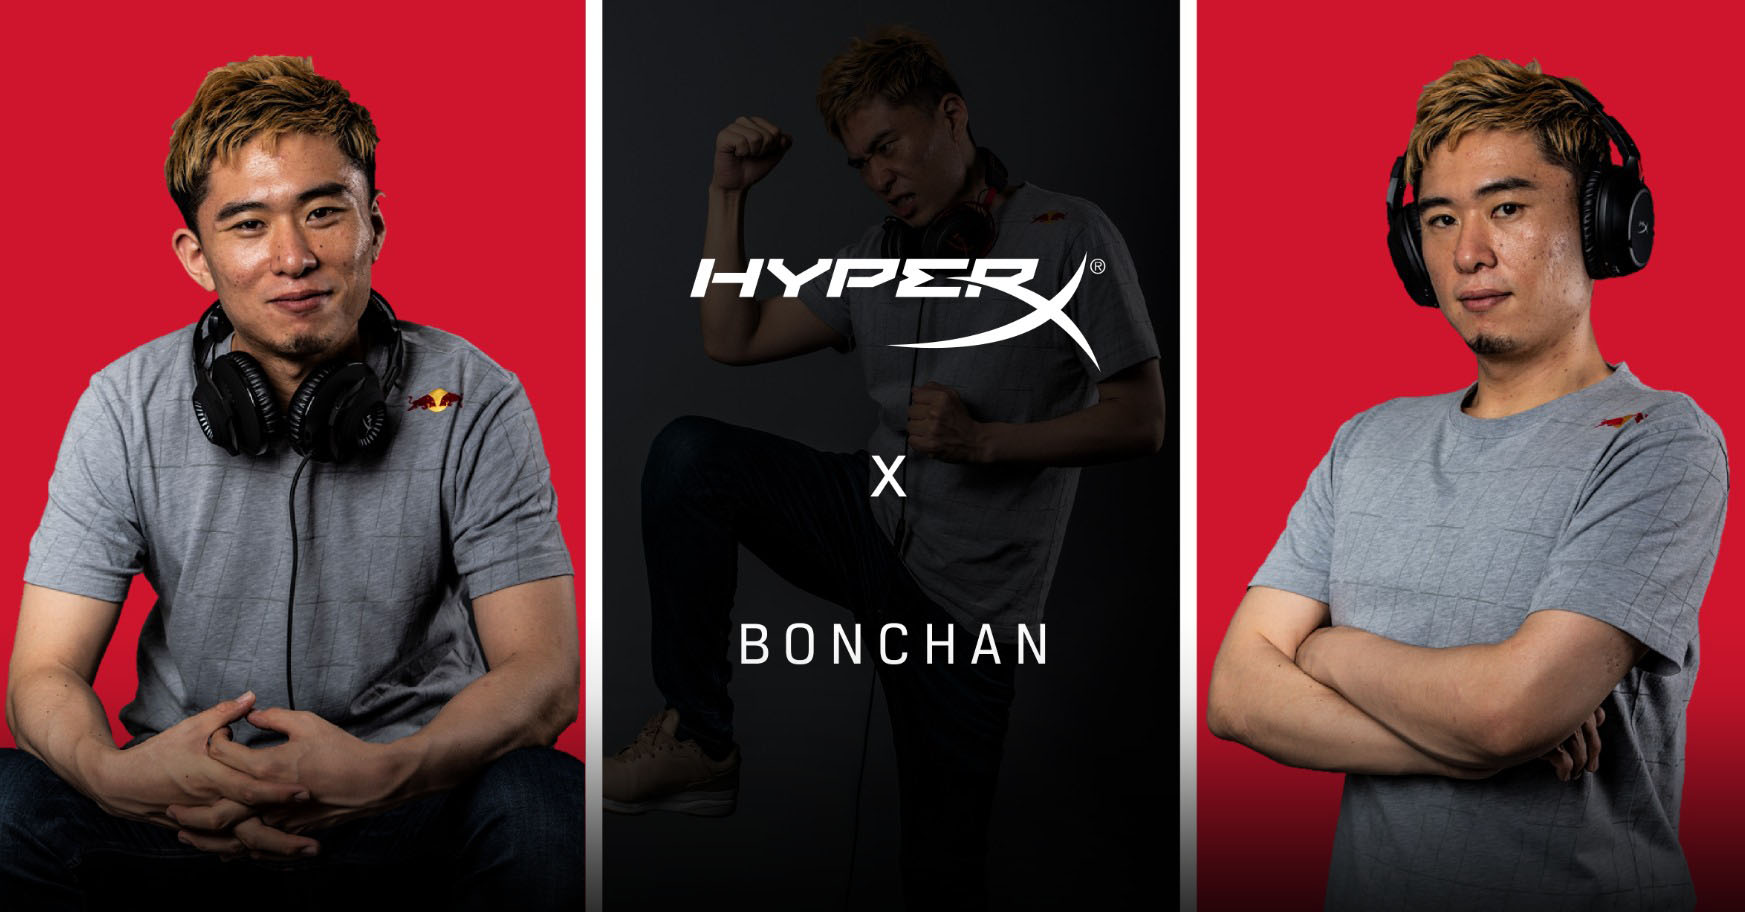 HyperX Now the Headset Sponsor of Street Fighter Champion Bonchan